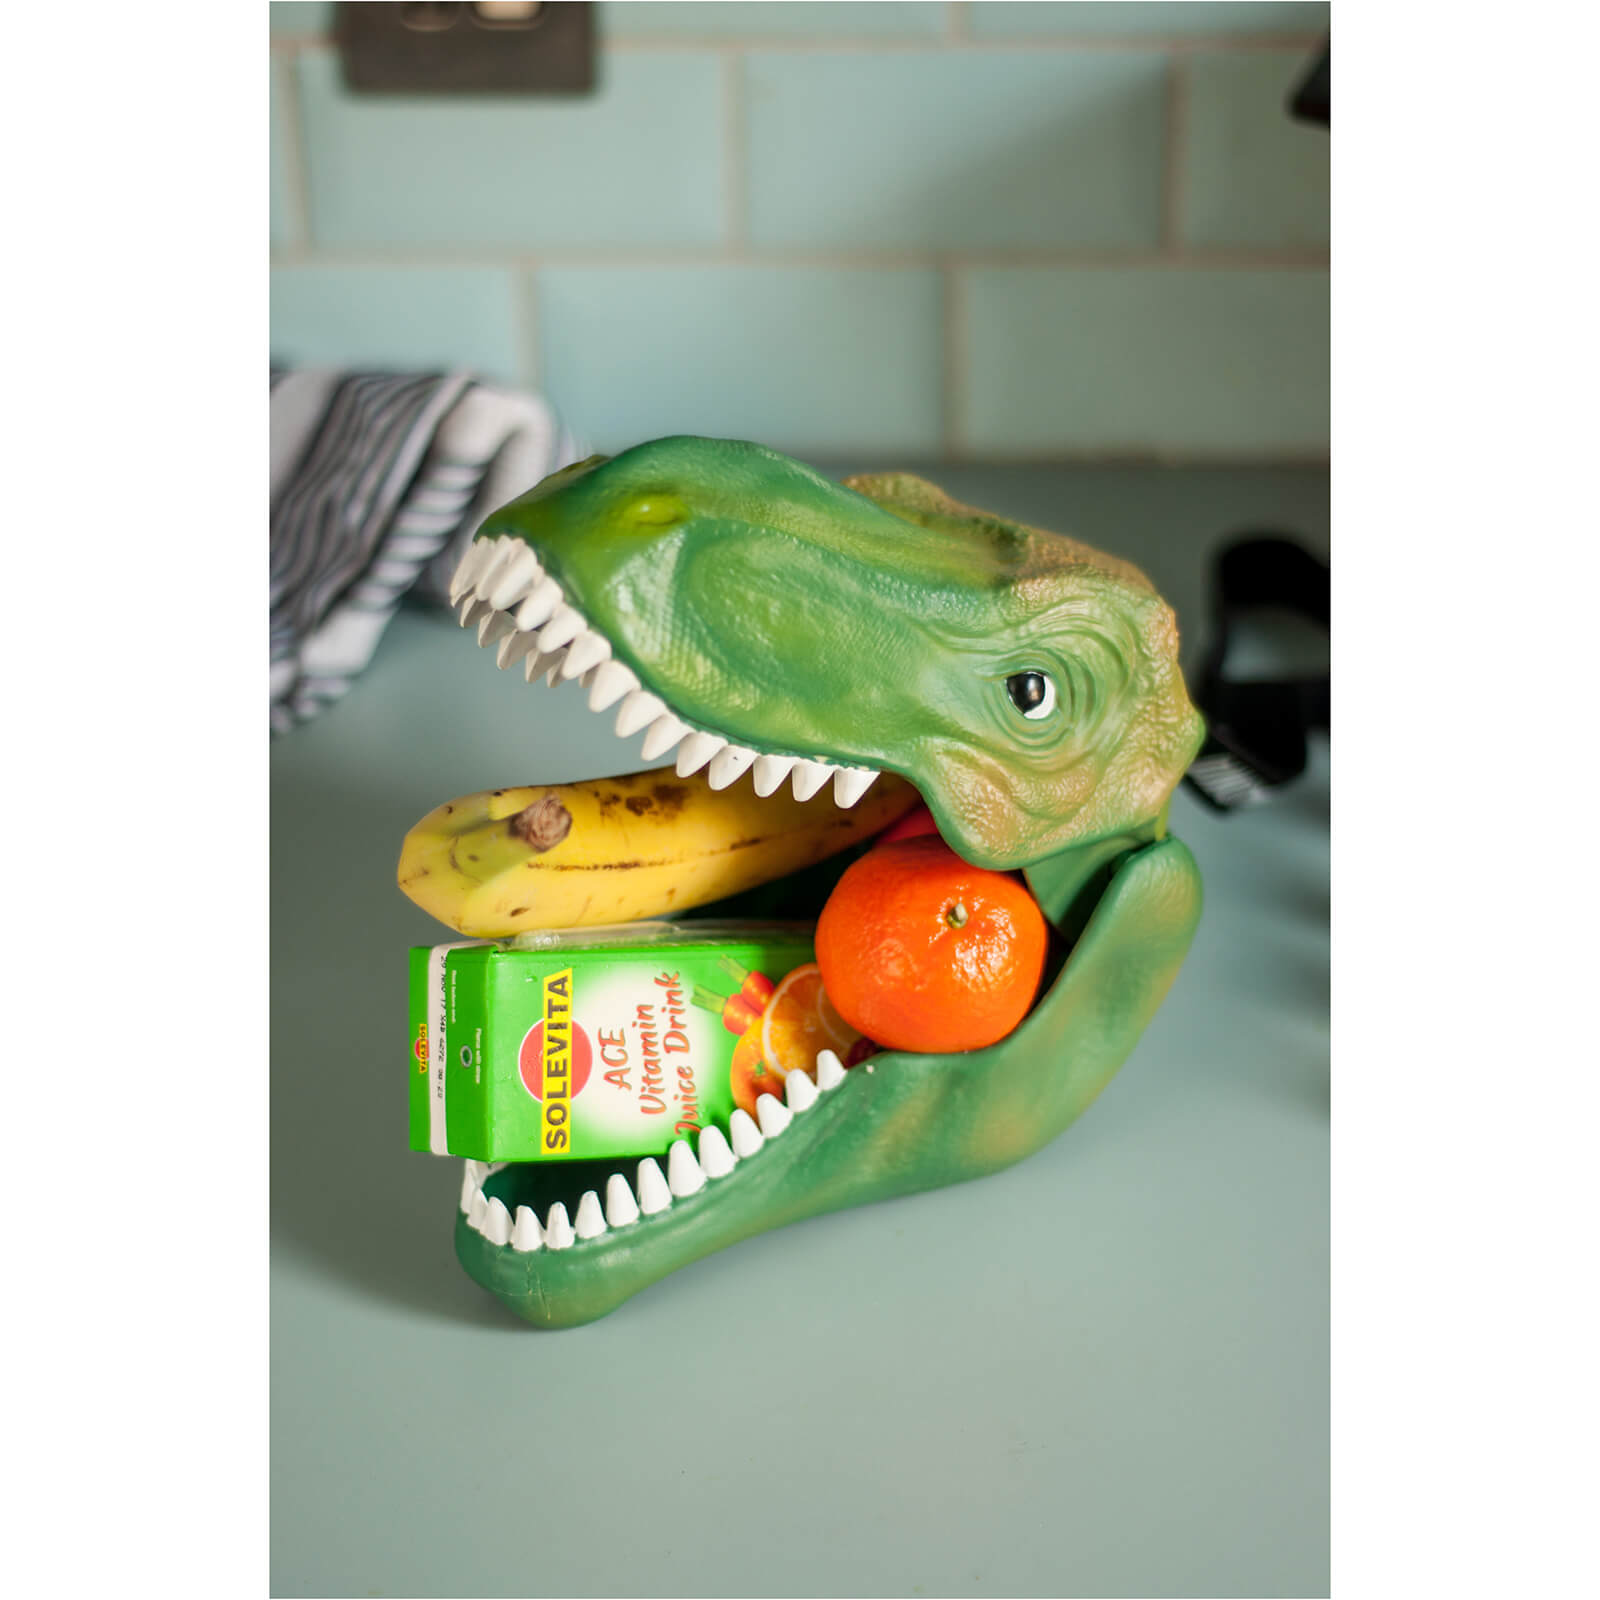 Dinosaur Lunch Box